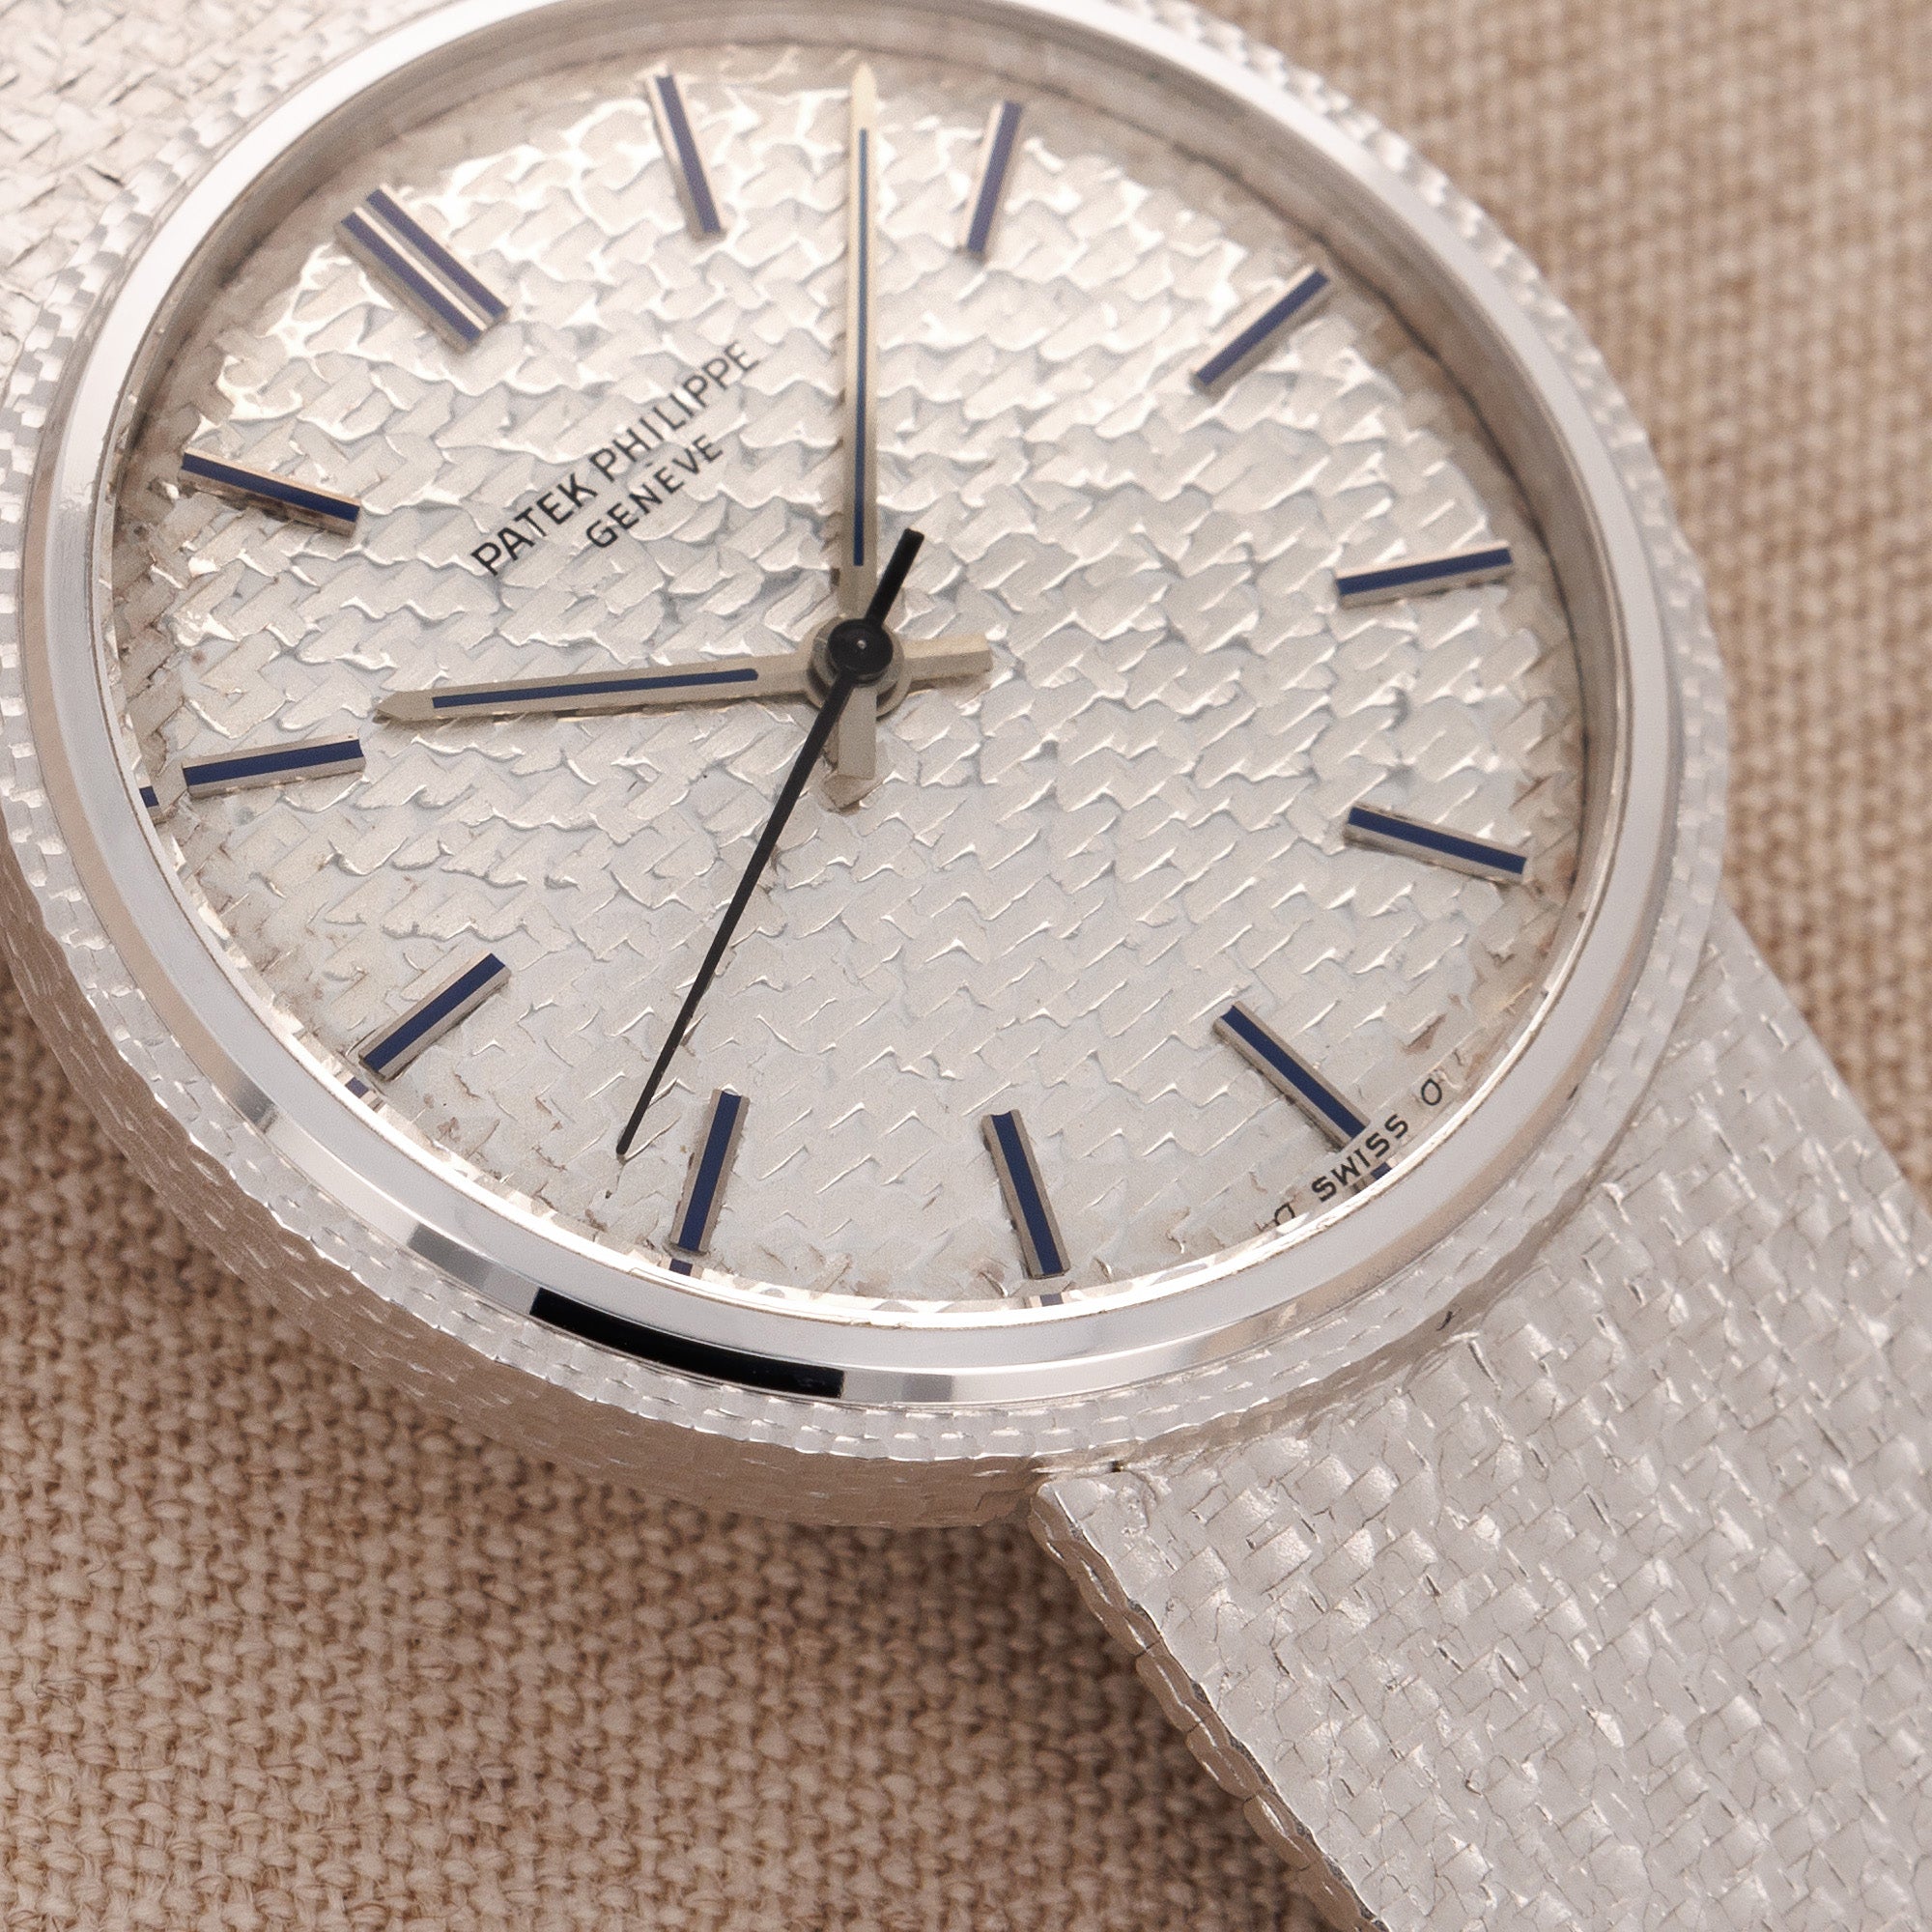 Patek Philippe - Patek Philippe White Gold Calatrava Ref. 3563 with Blue Marker Sigma Dial - The Keystone Watches